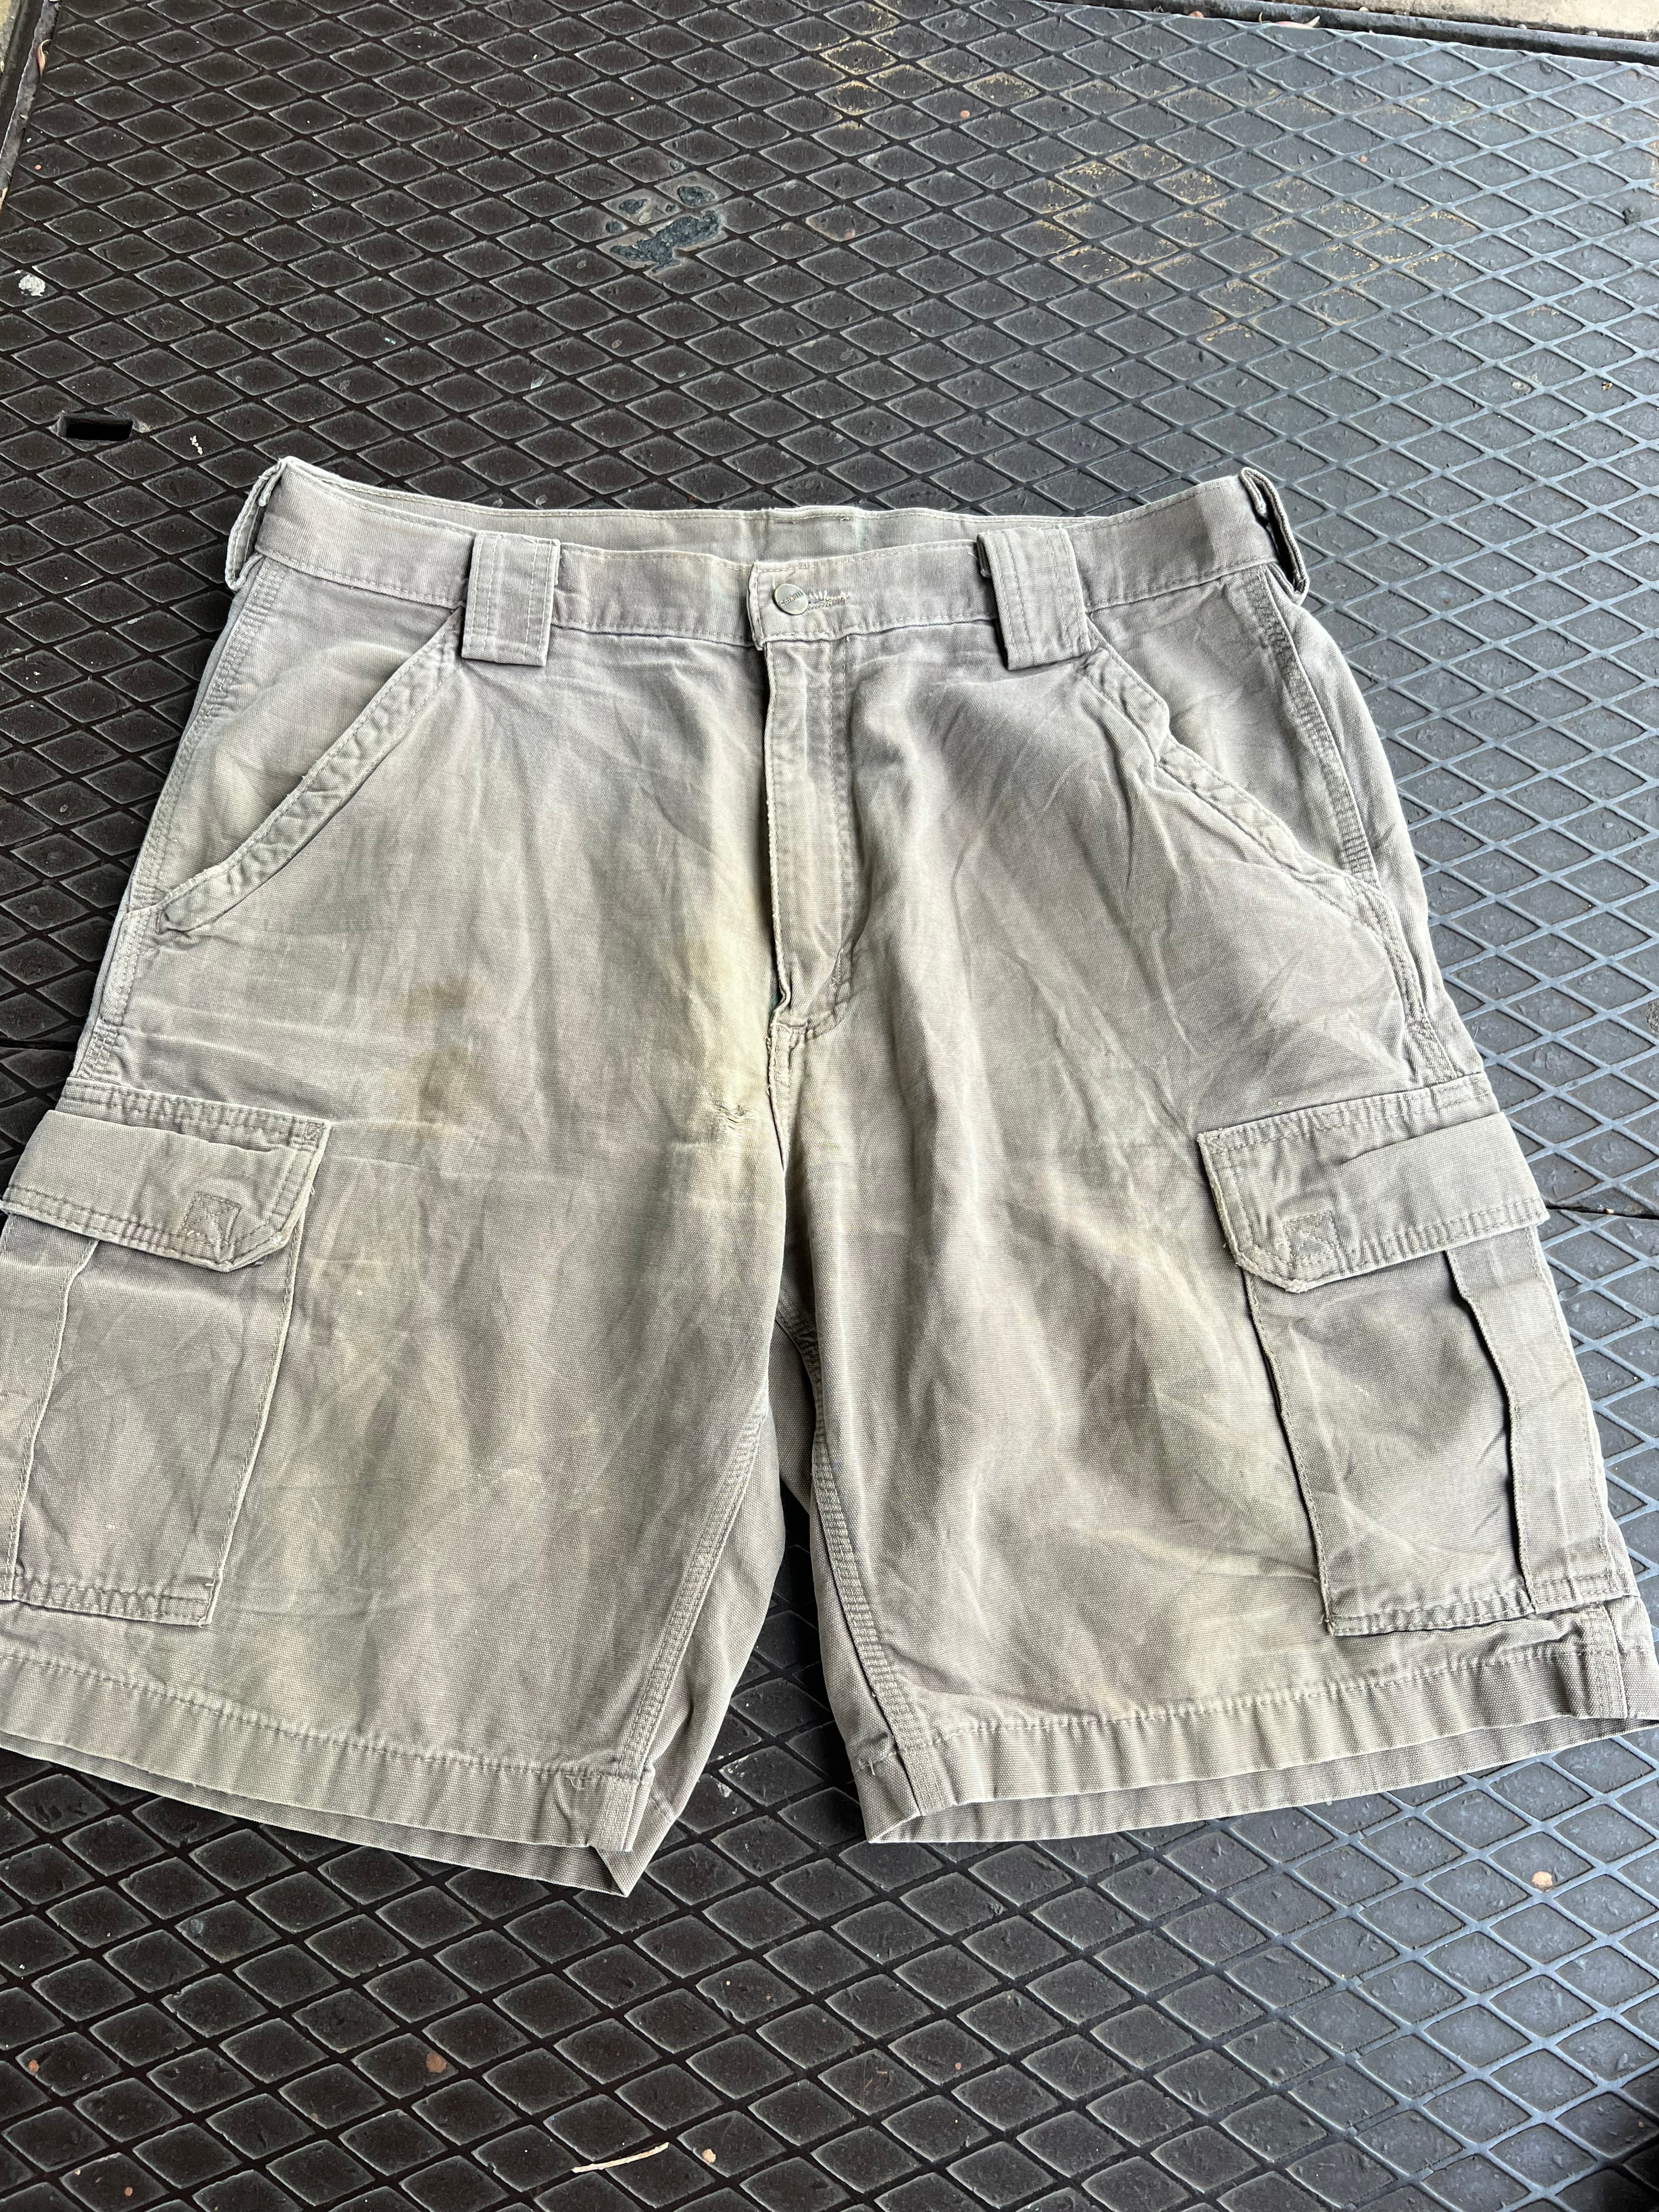 36 - Carhartt Cargo Shorts Faded Brown